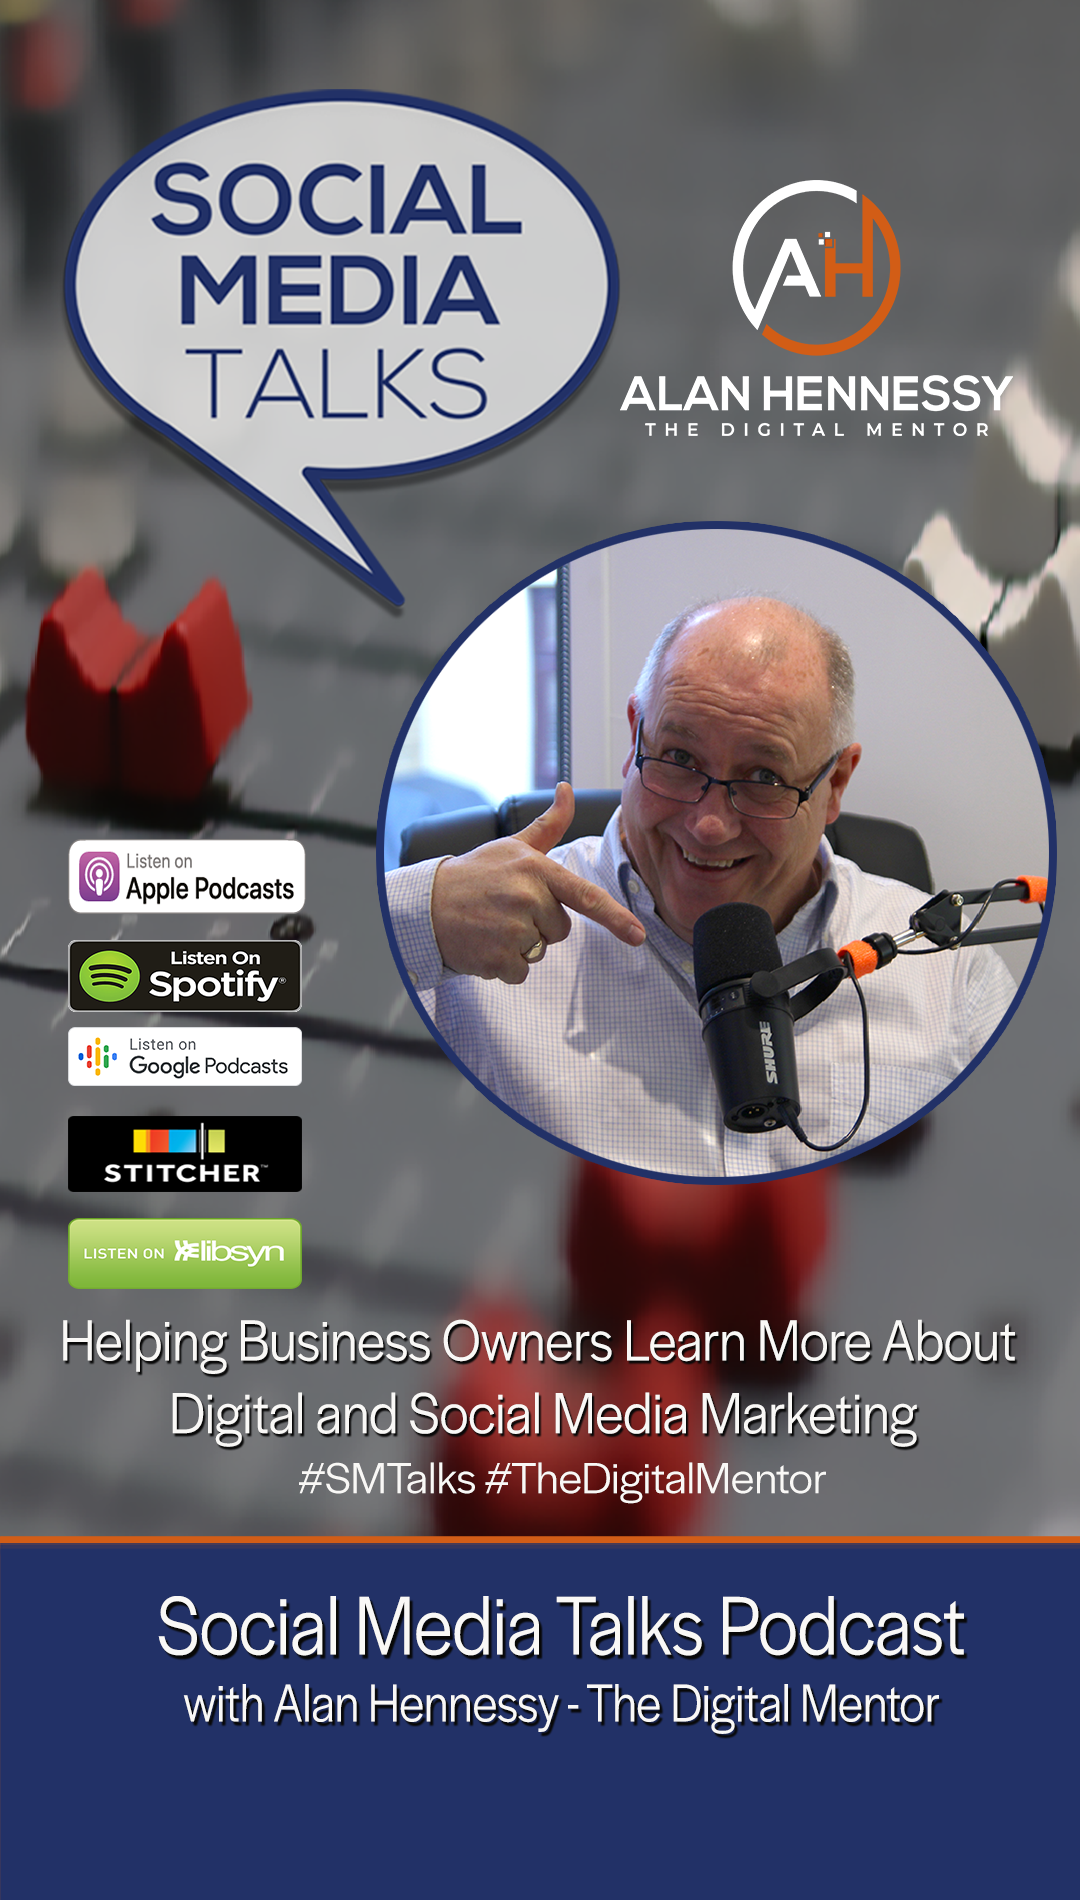 Social Media Talks Podcast with Alan Hennessy - The Digital Mentor